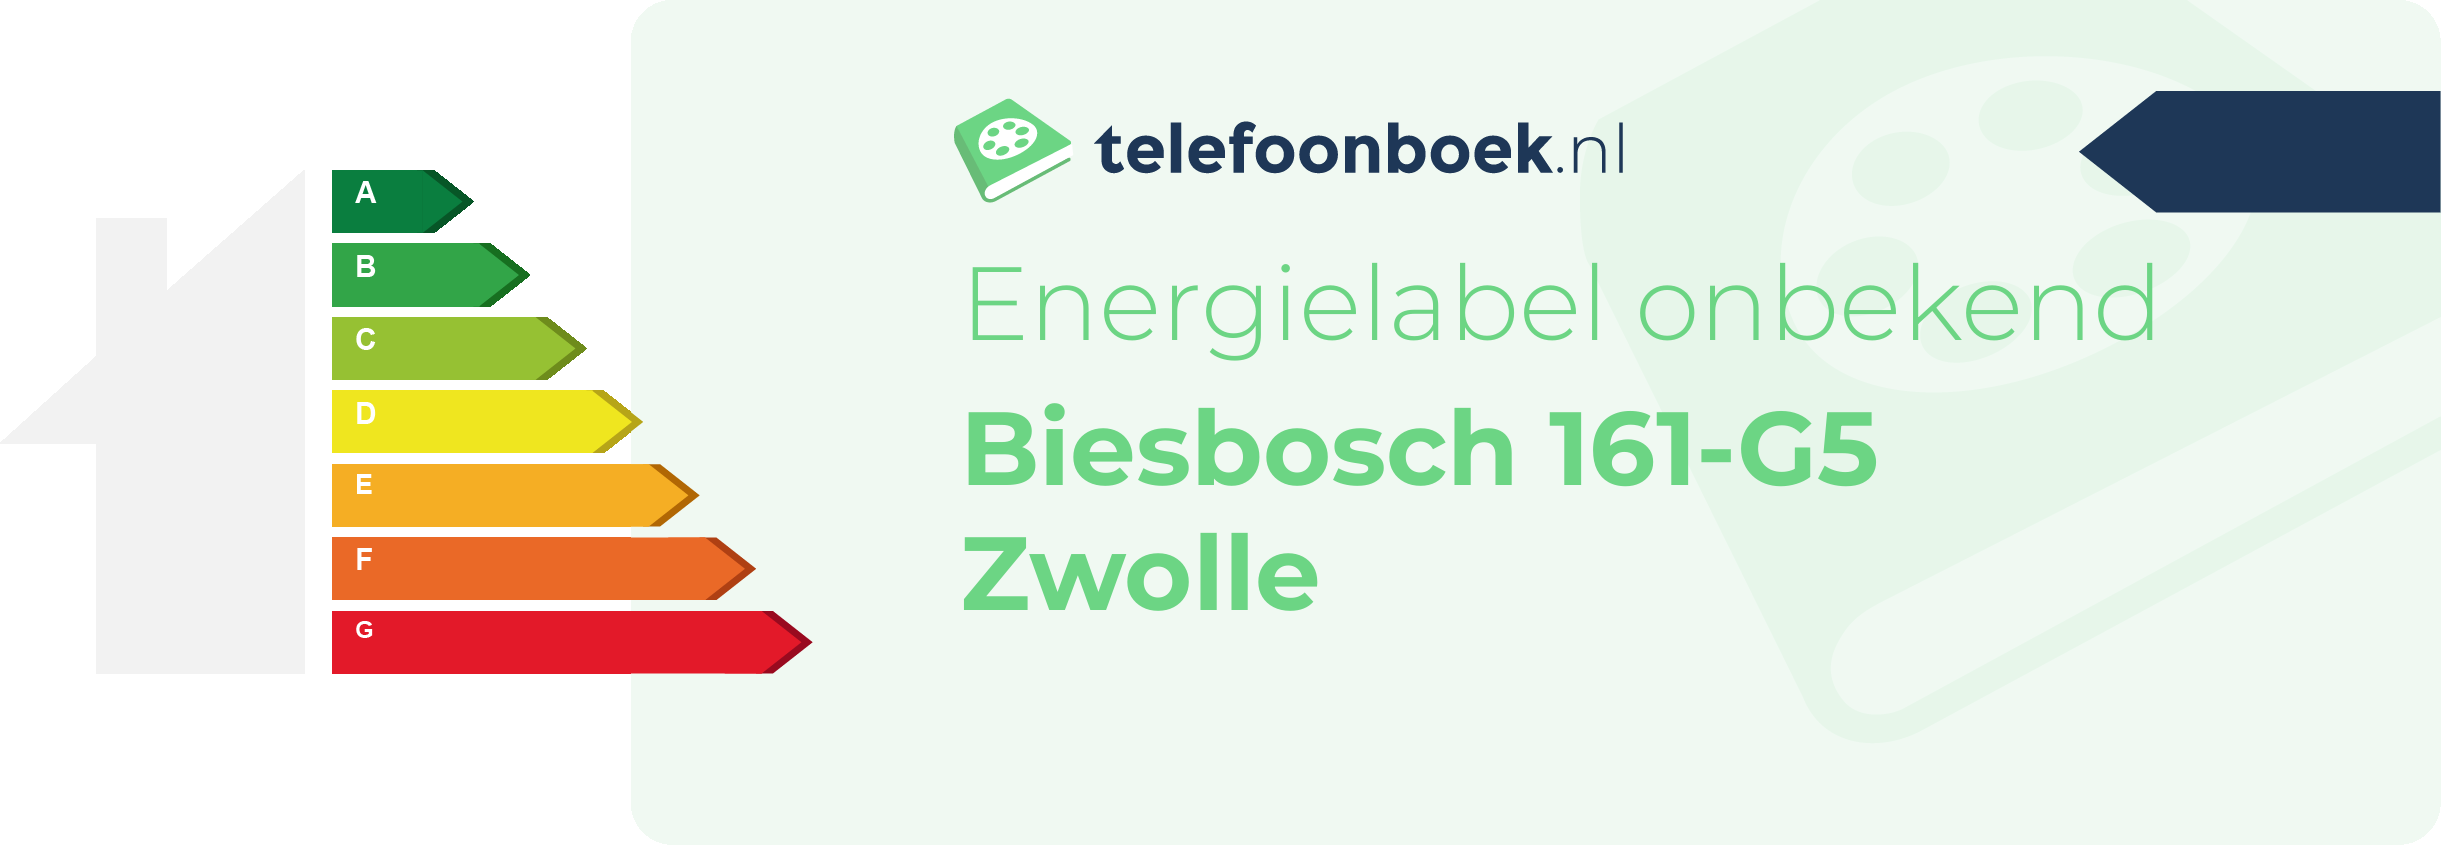 Energielabel Biesbosch 161-G5 Zwolle